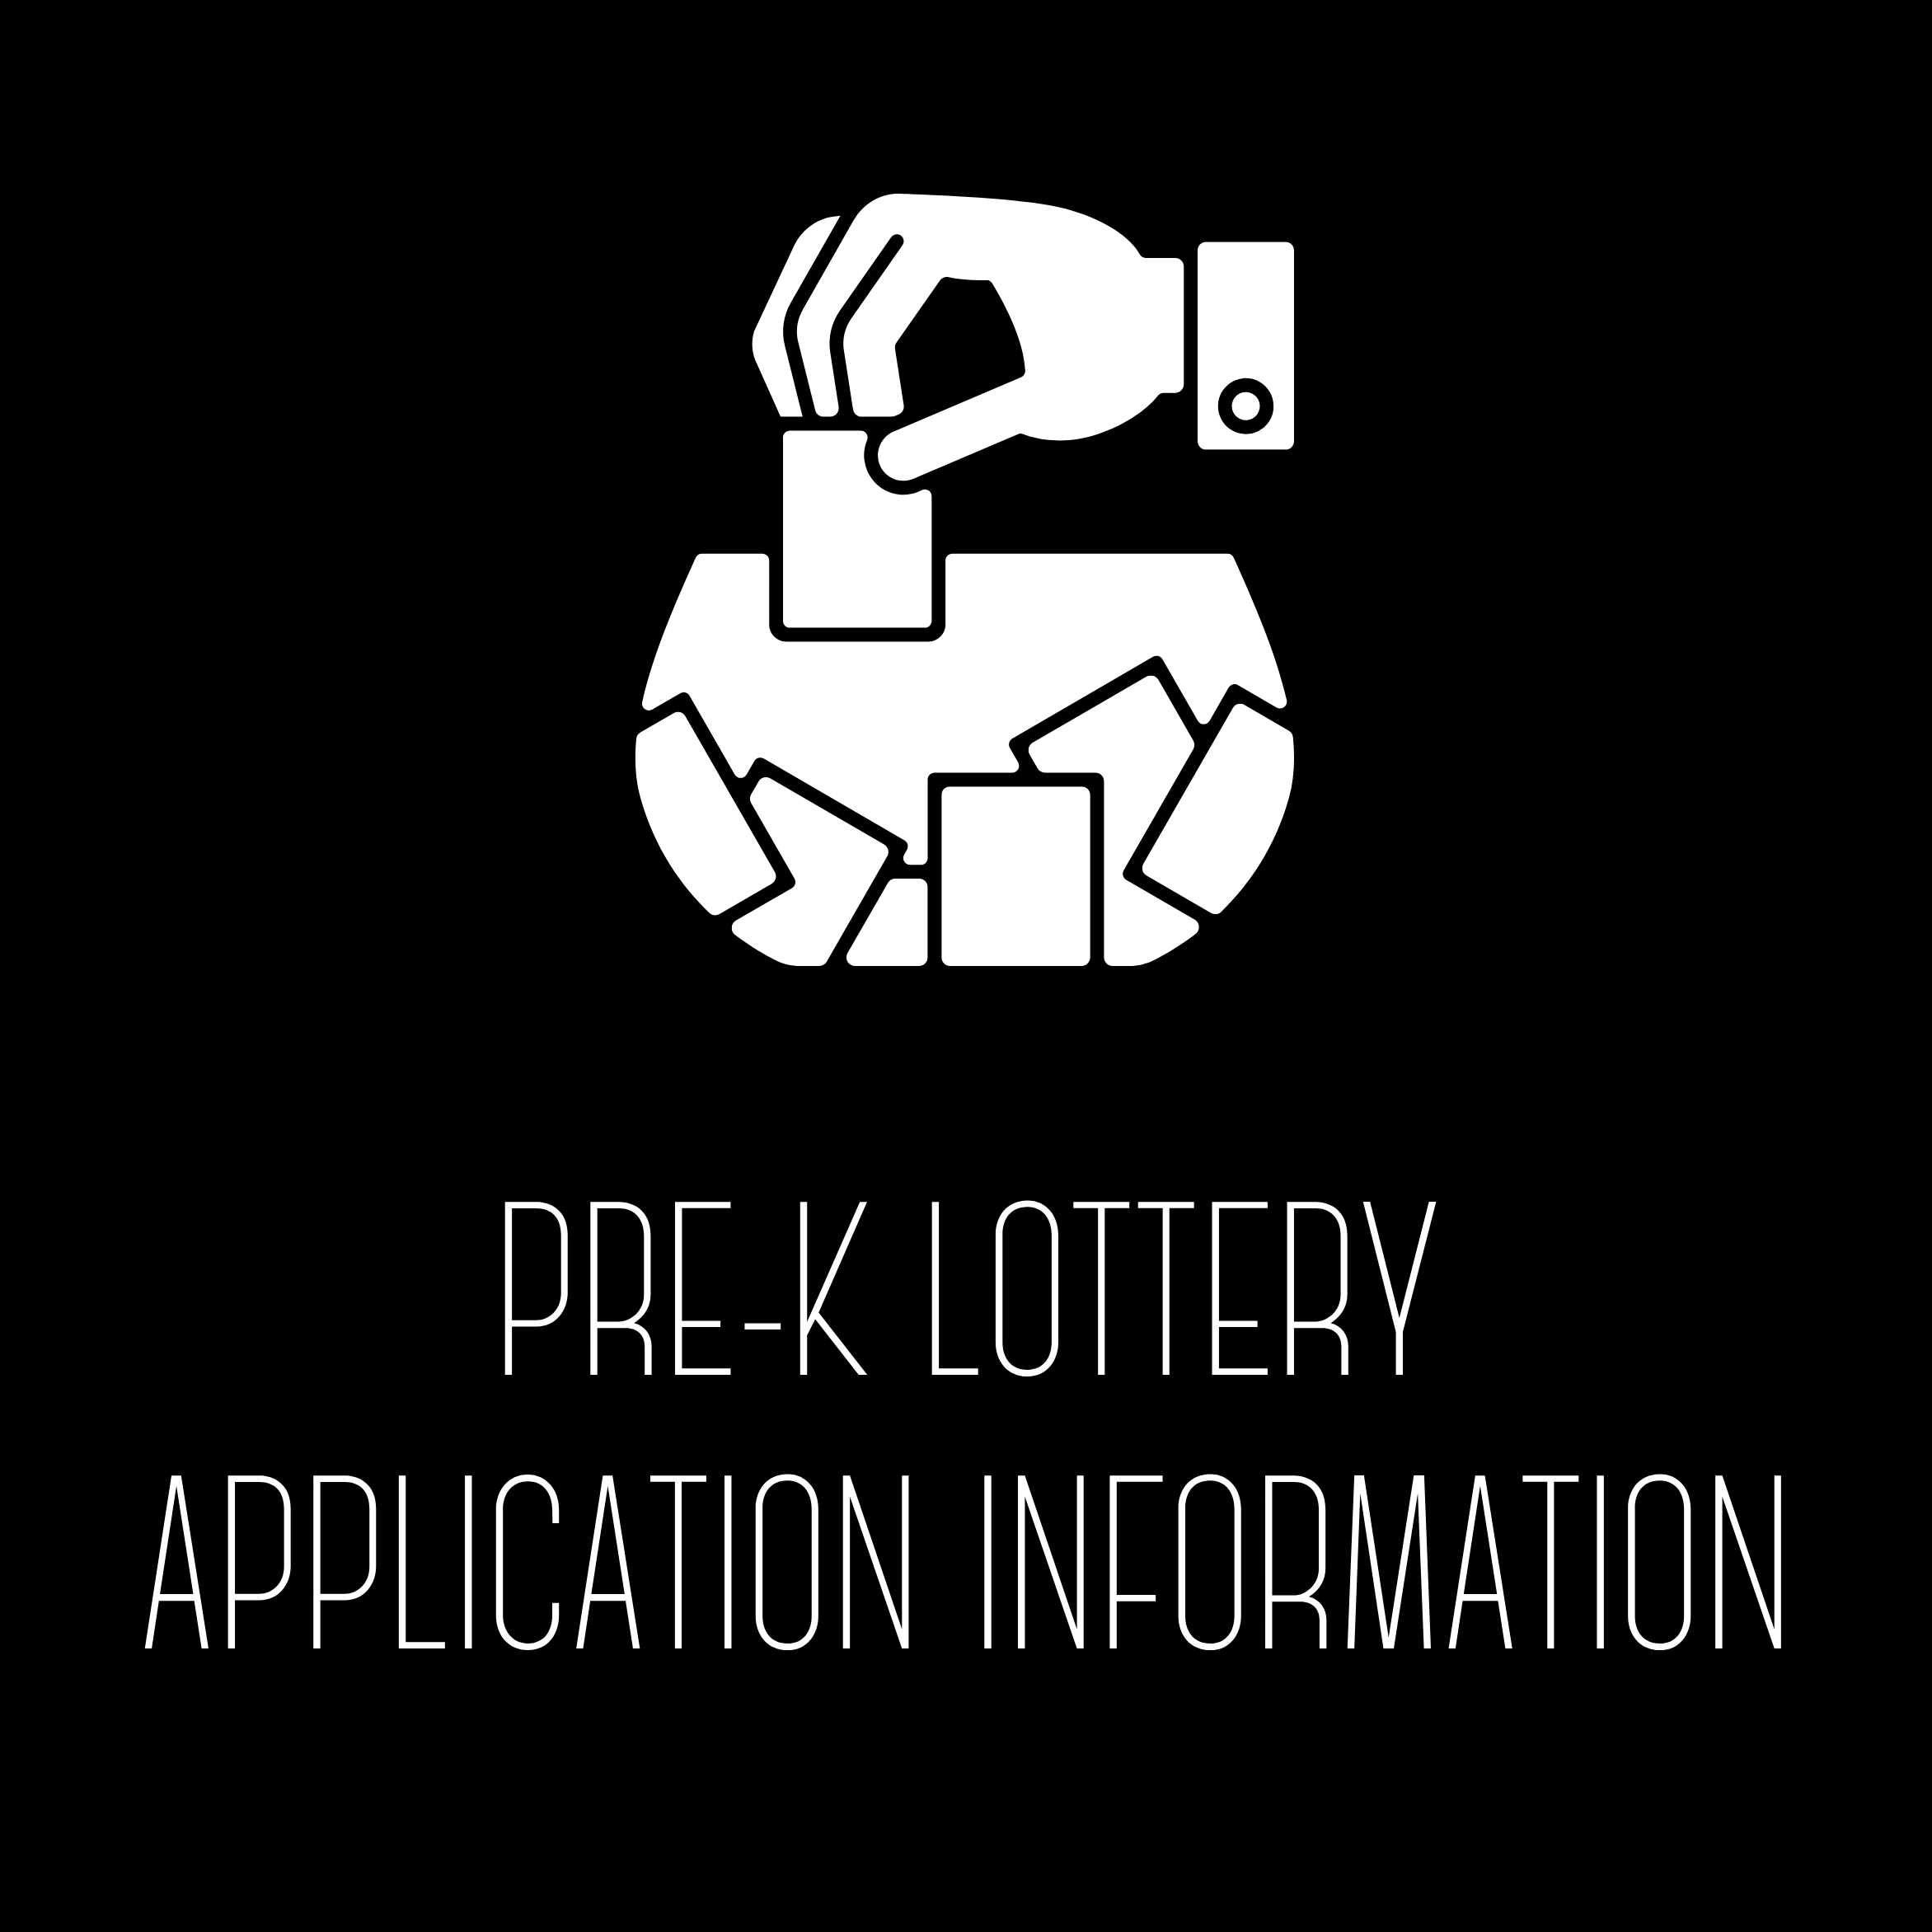 Pre-K Lottery Application Information